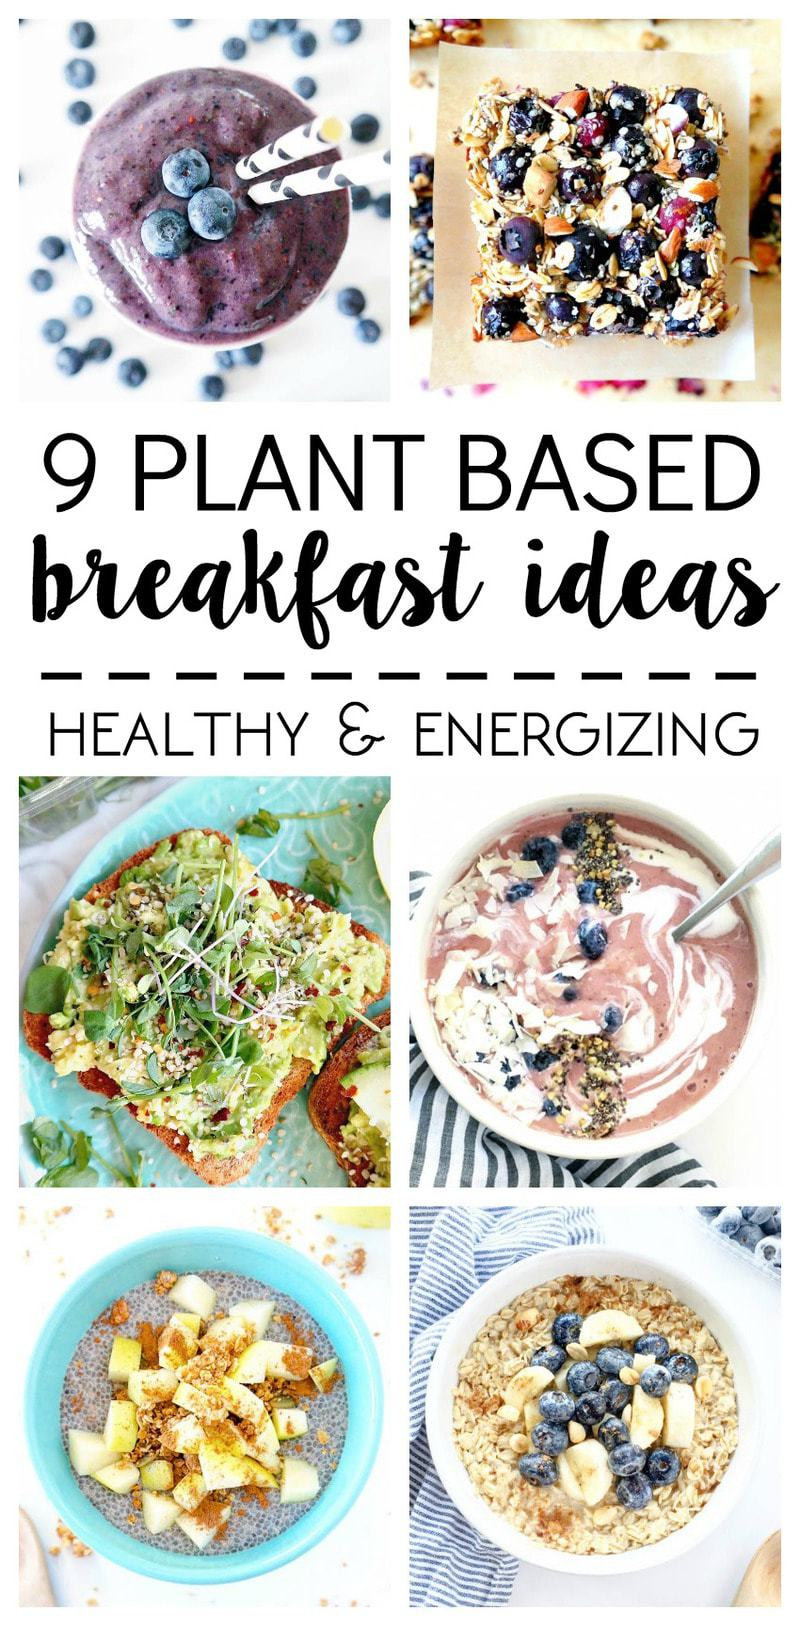 Plant Based Recipes Breakfast
 What I Ate 9 Plant Based Breakfast Ideas The Glowing Fridge